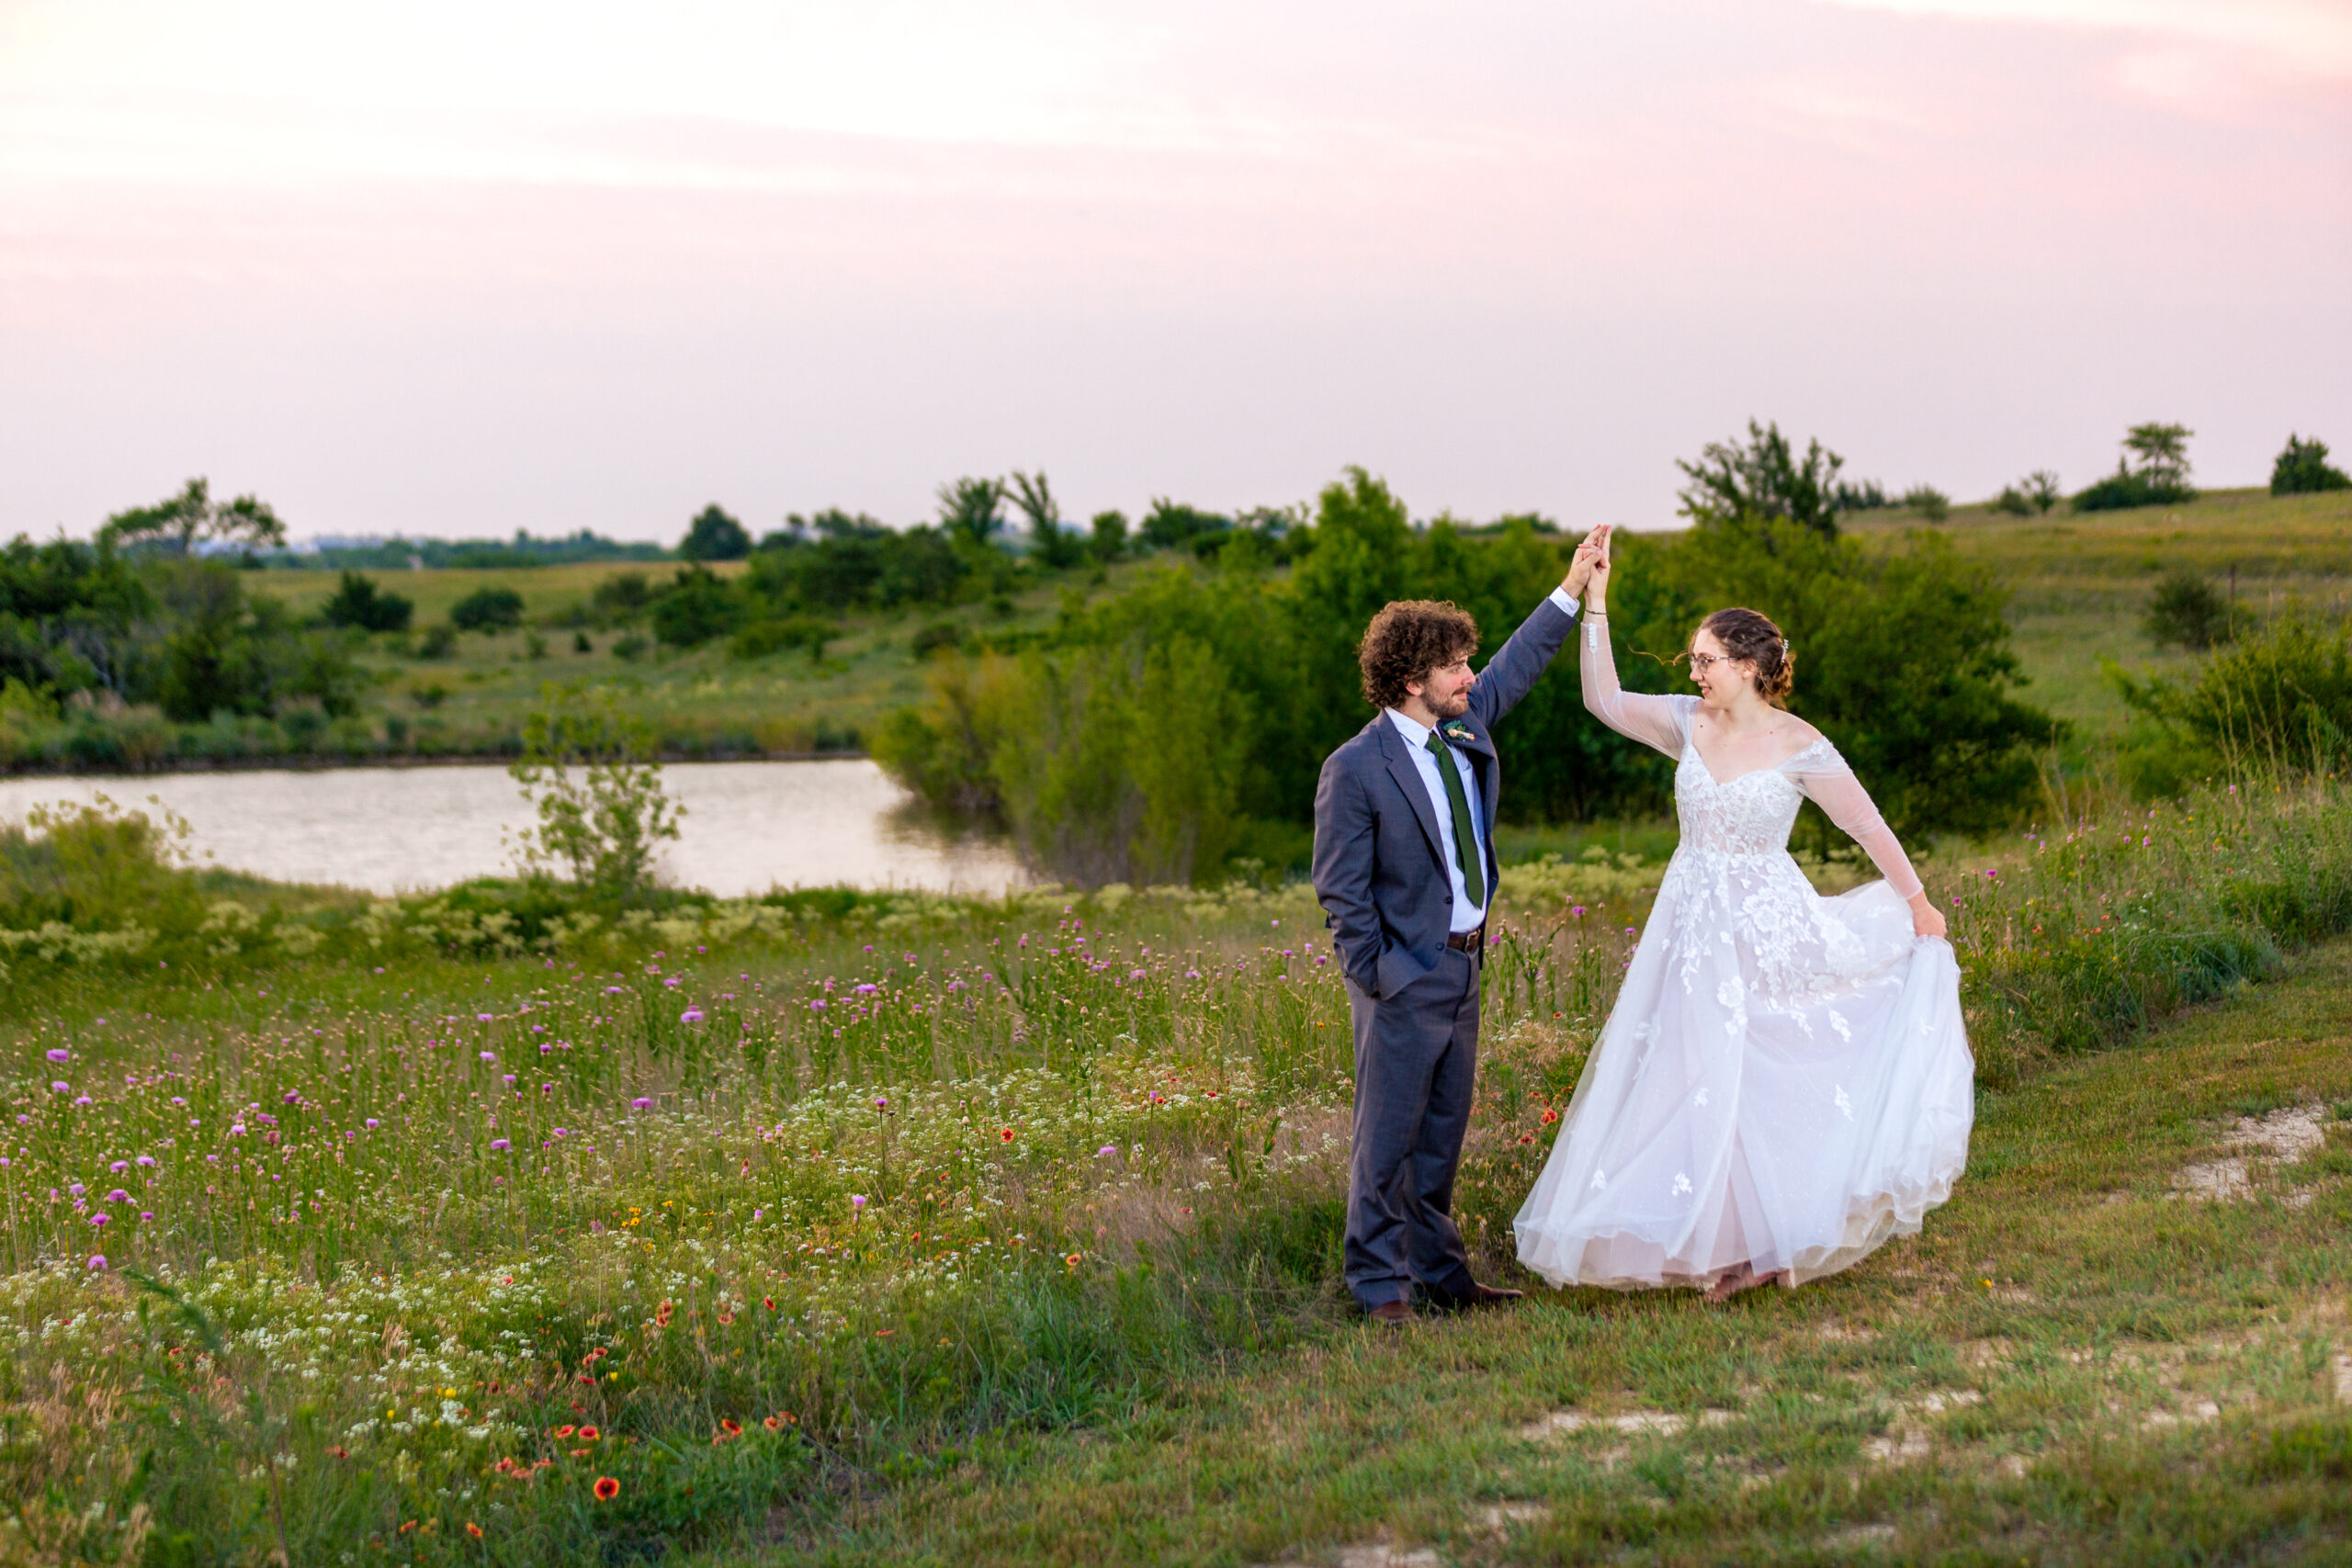 Dallas wedding photographers capture groom spinning bride